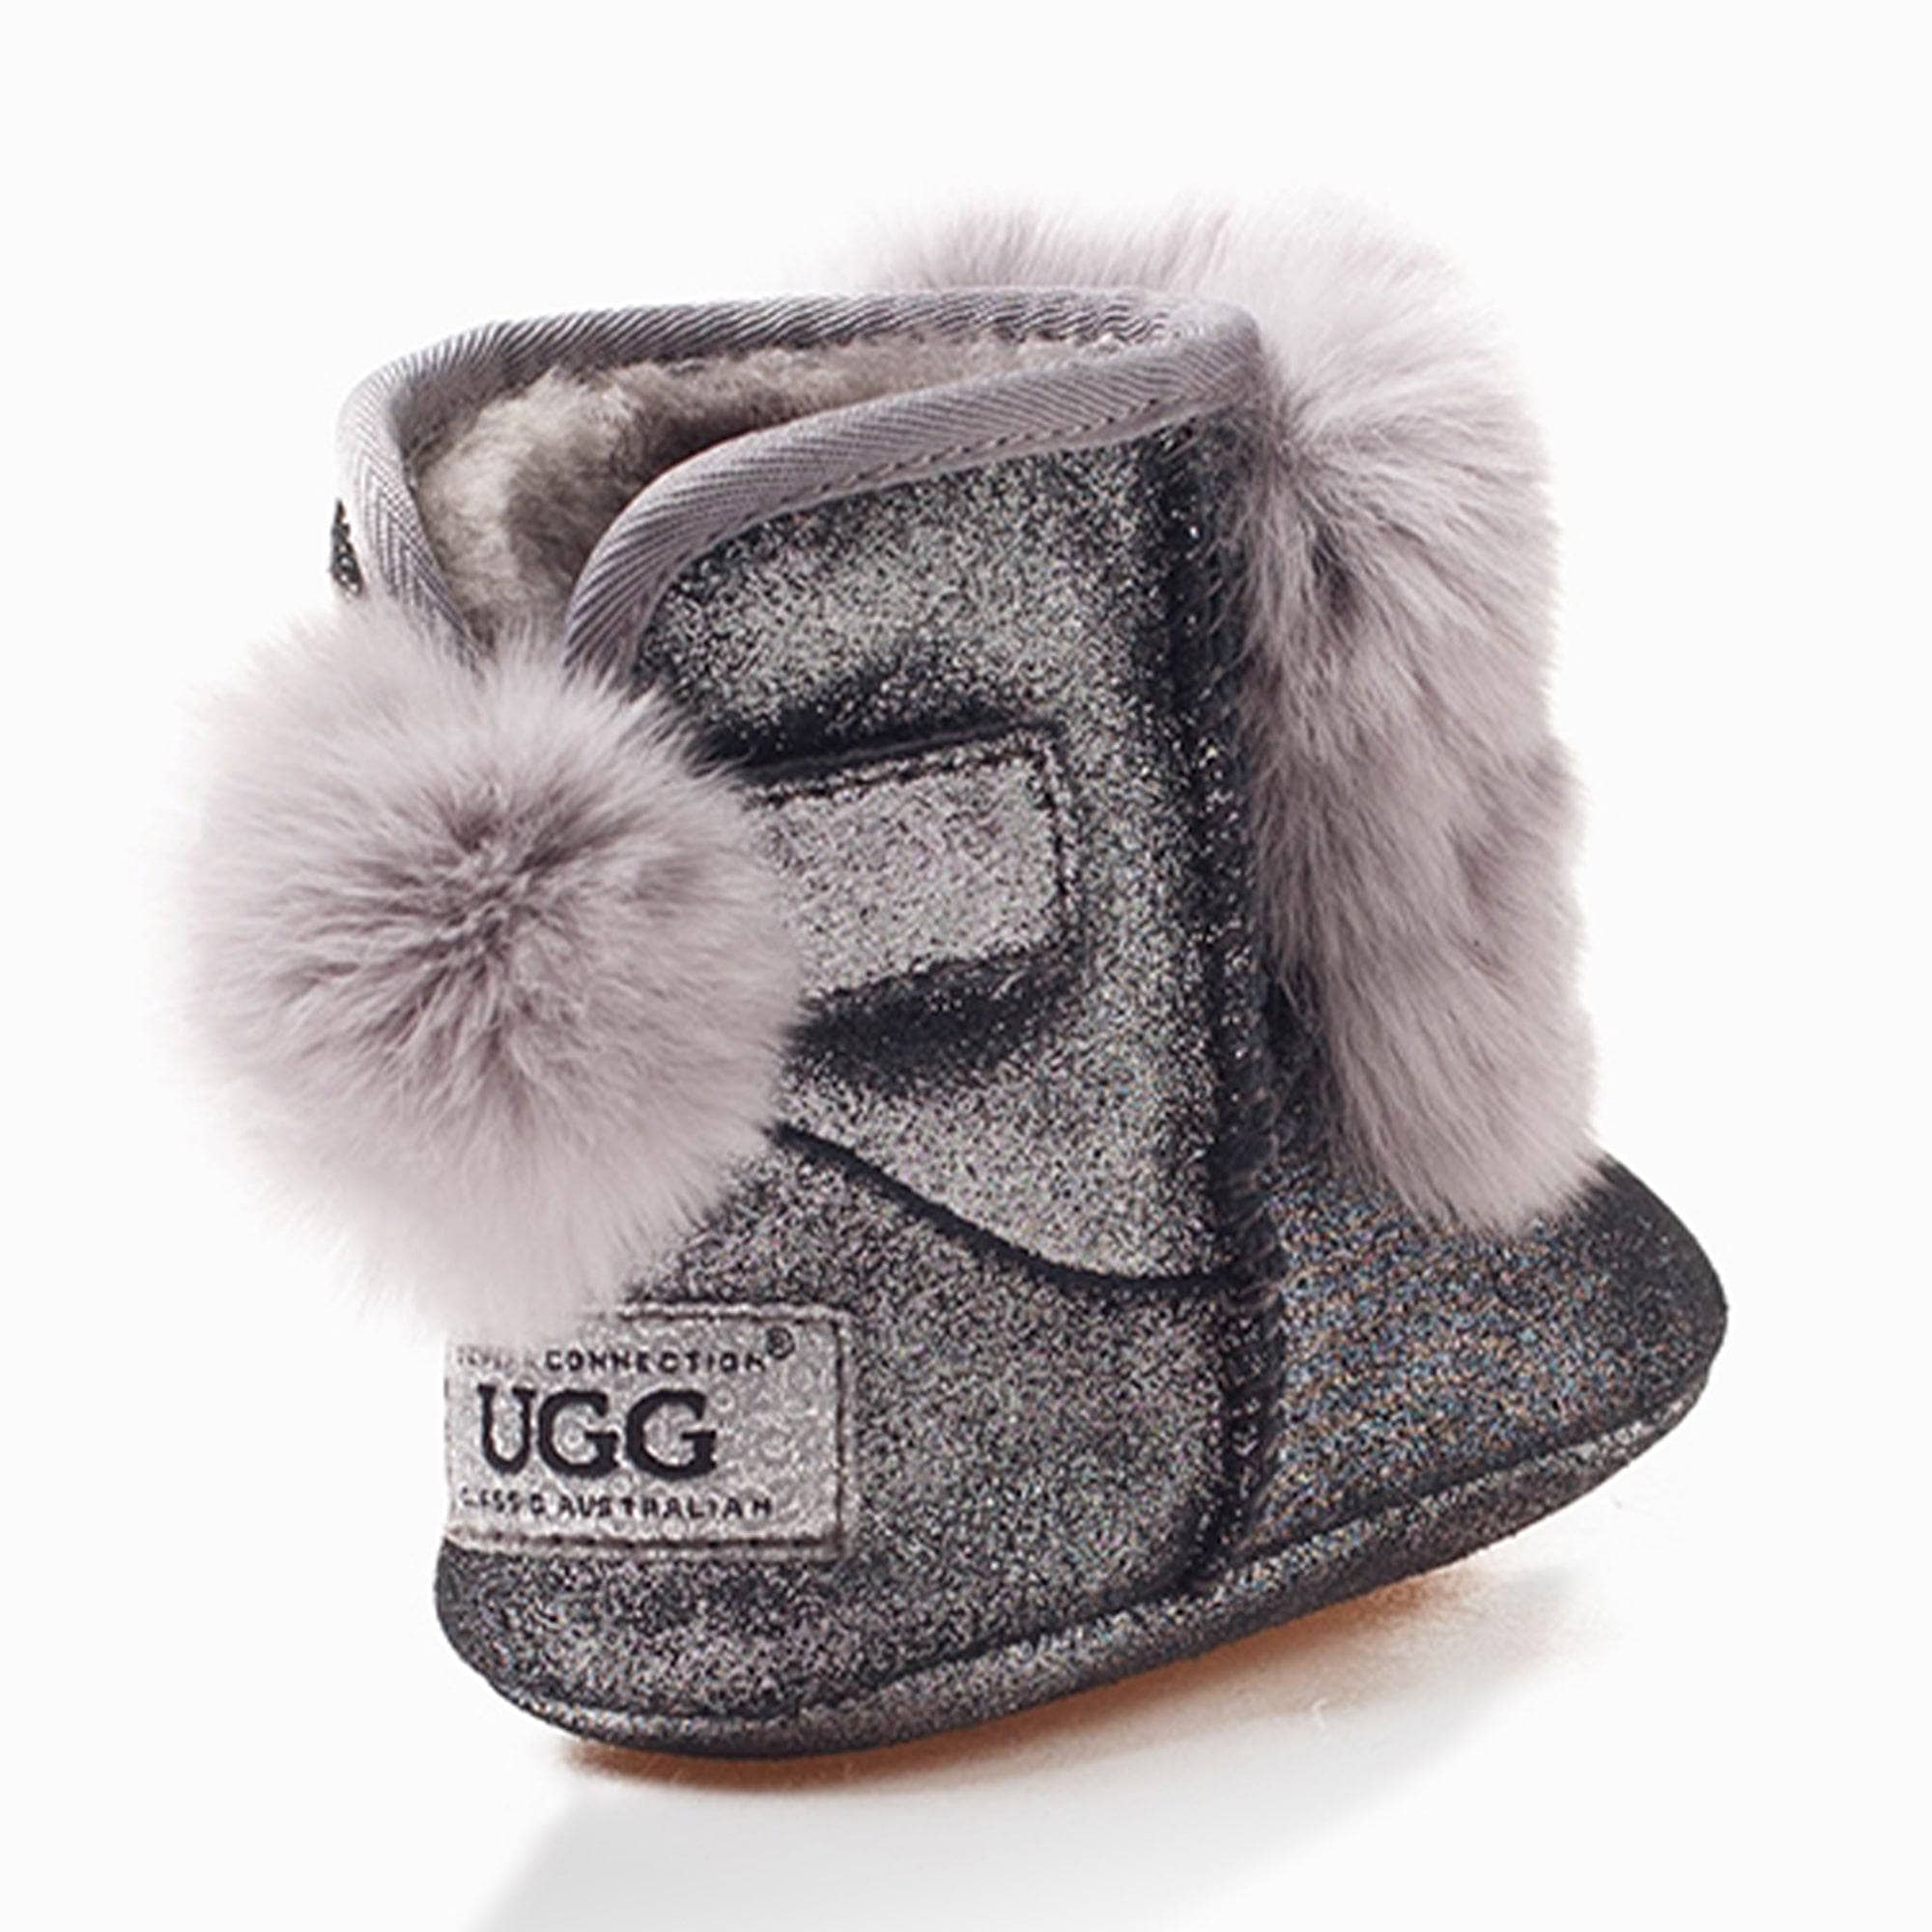 Ugg Boots - UGG Baby Rabbit Boots - Original UGG Australia Classic